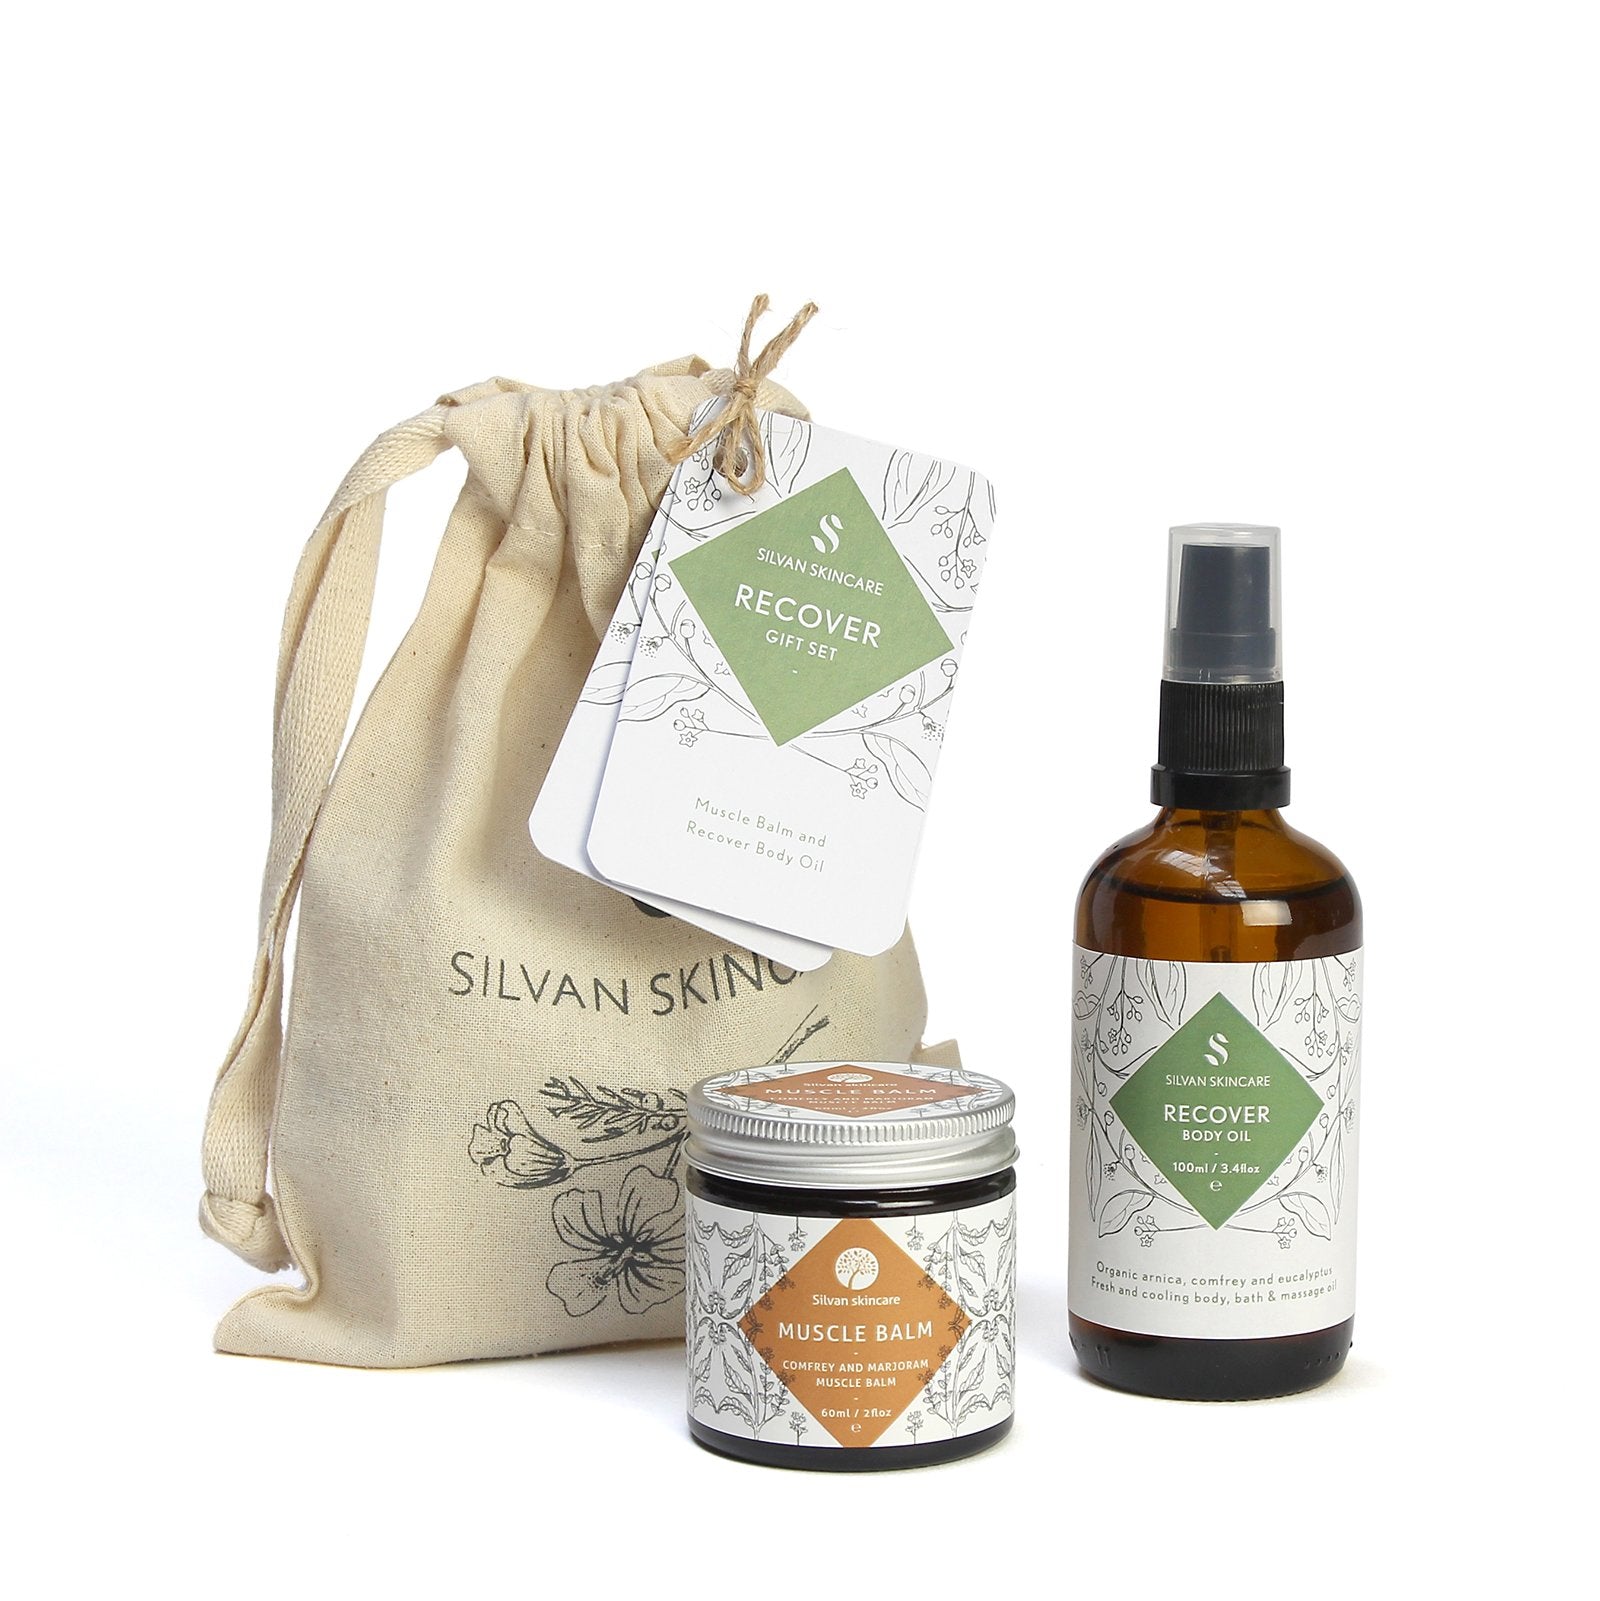 Silvan Skincare Recover Gift Set. Vegan bodycare